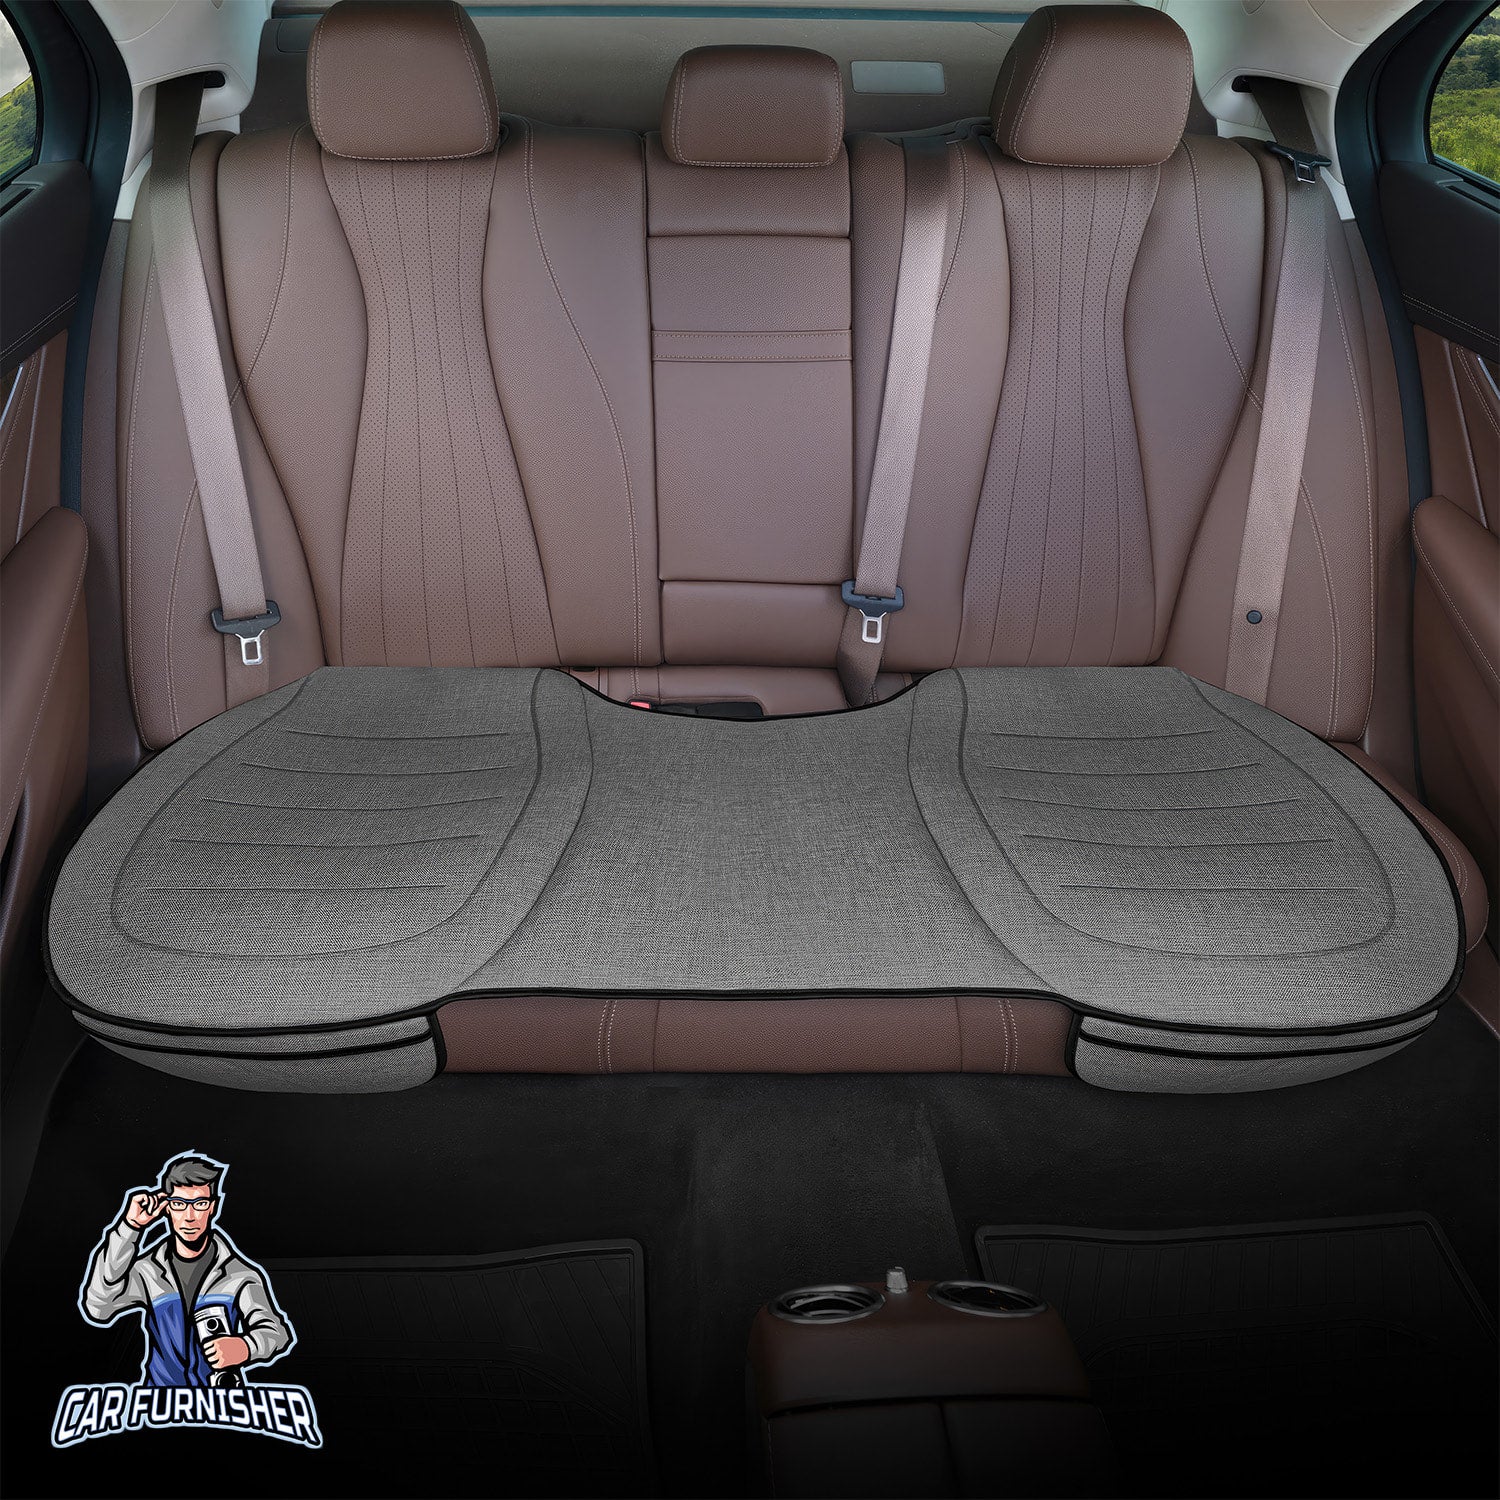 Car Seat Protector - Premium Linen Design Smoked 1x Back Bottom Linen Fabric